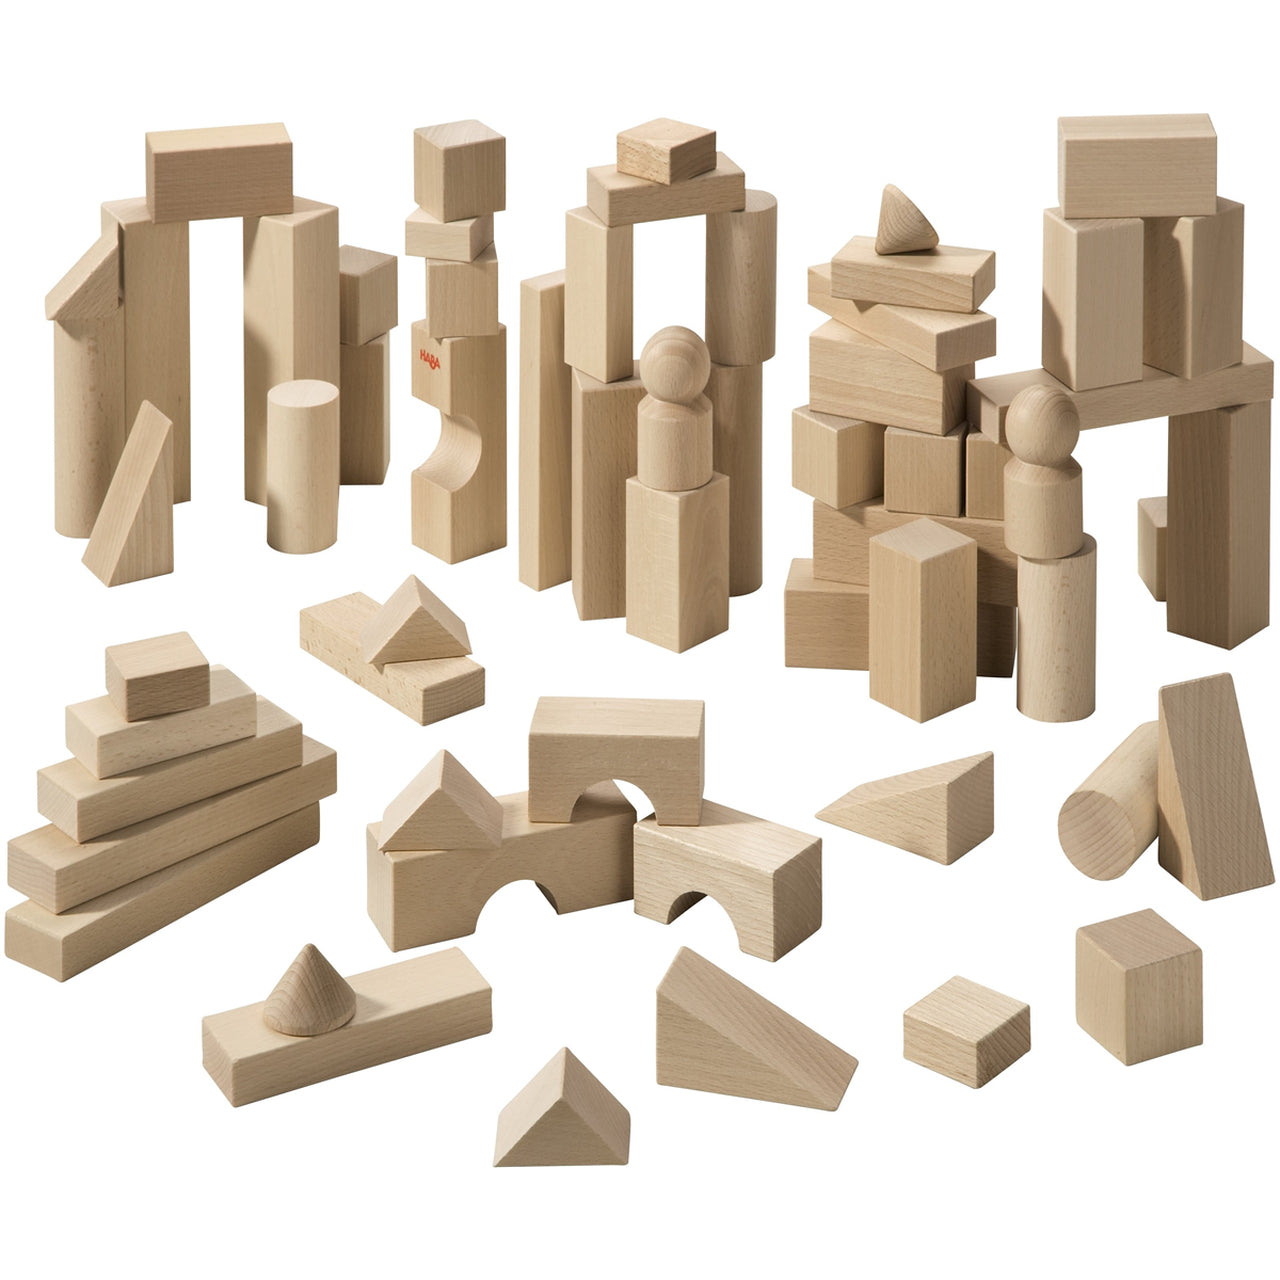 HABA Basic Building Blocks 60 Piece Large Natural Wood Starter Set